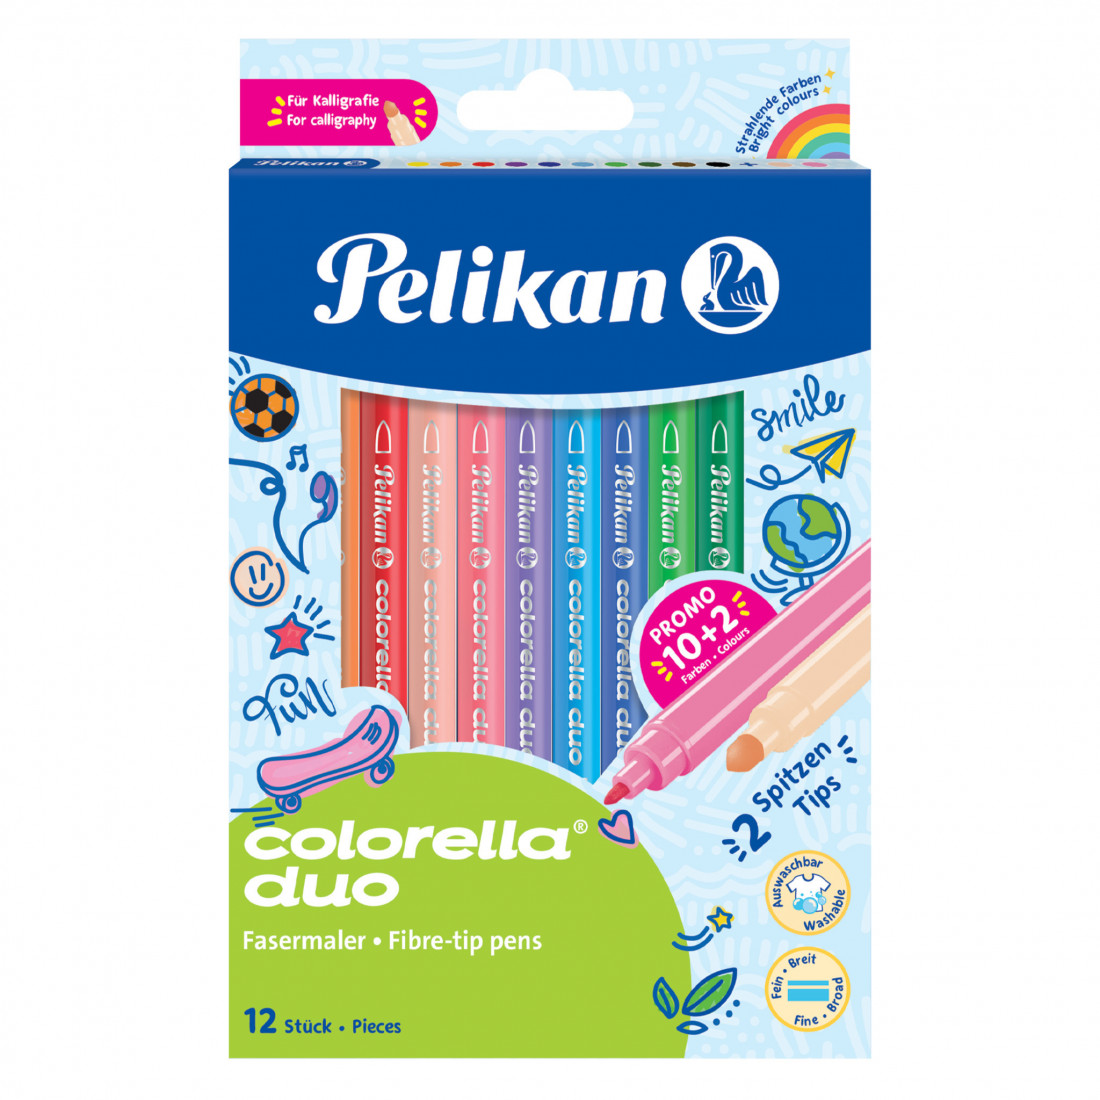 Pelikan Μαρκαδόροι Σχολικοί 12 Χρωμάτων Colorella Duo 813846 Pelikan